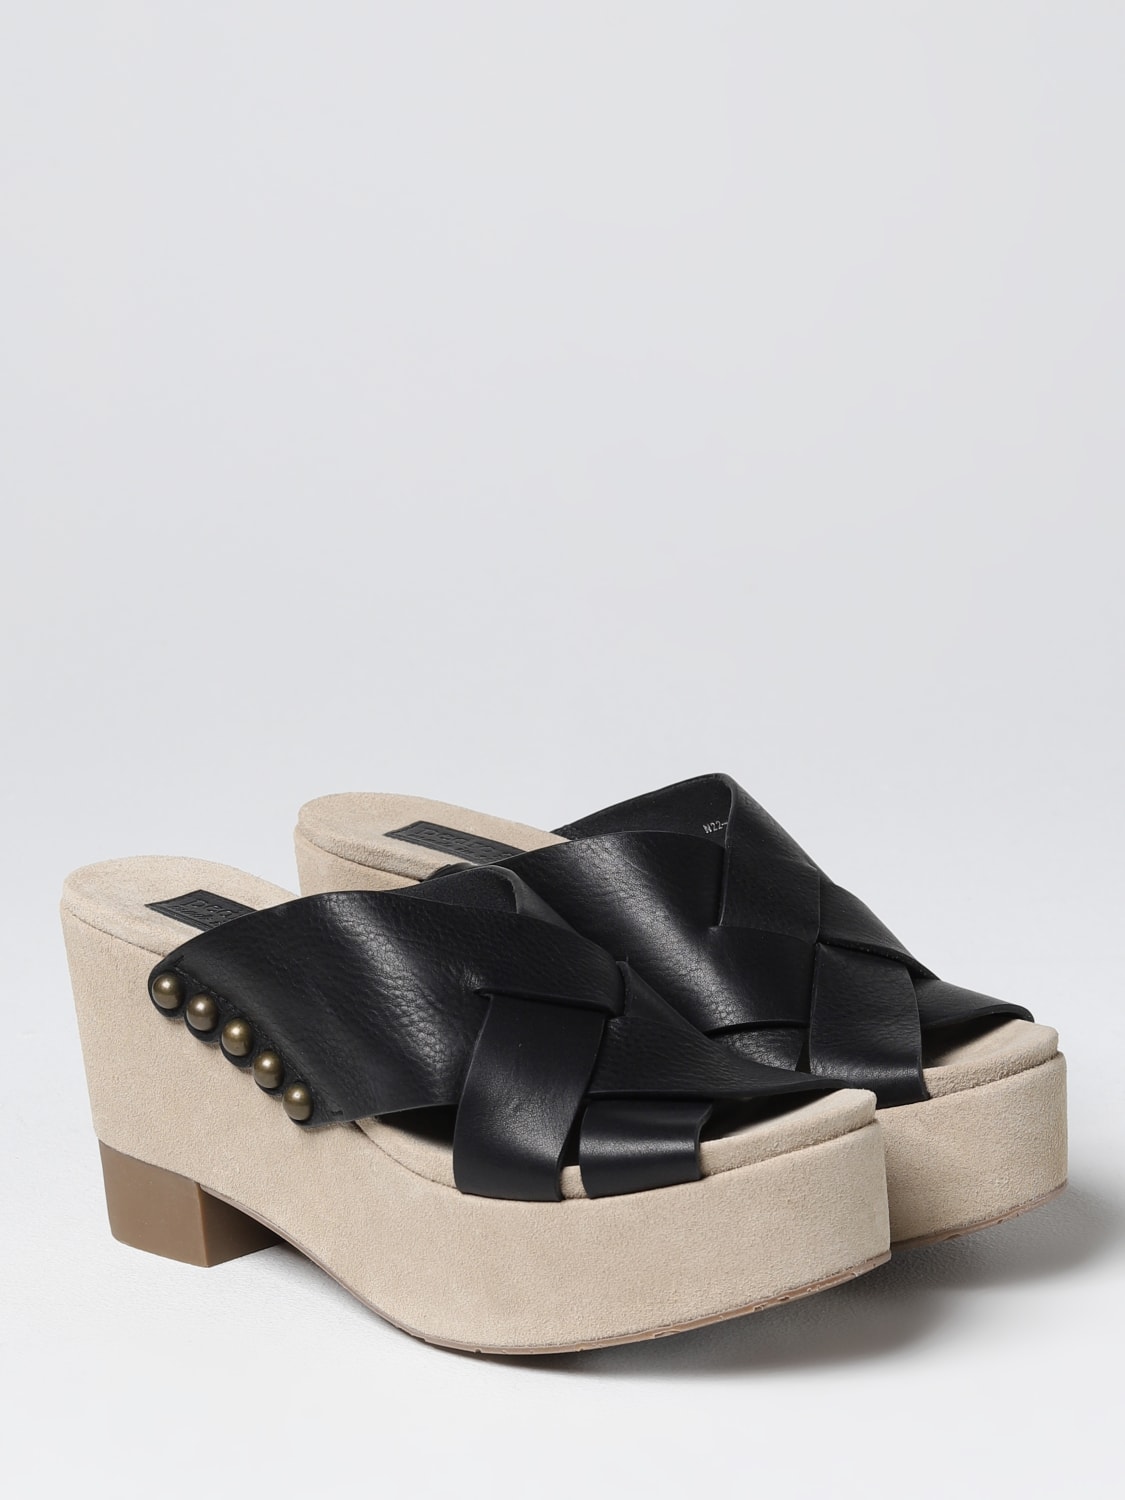 PEDRO heeled sandals for woman - Black | Pedro Garcia heeled sandals DELFINA_VACCHETTA online on GIGLIO.COM